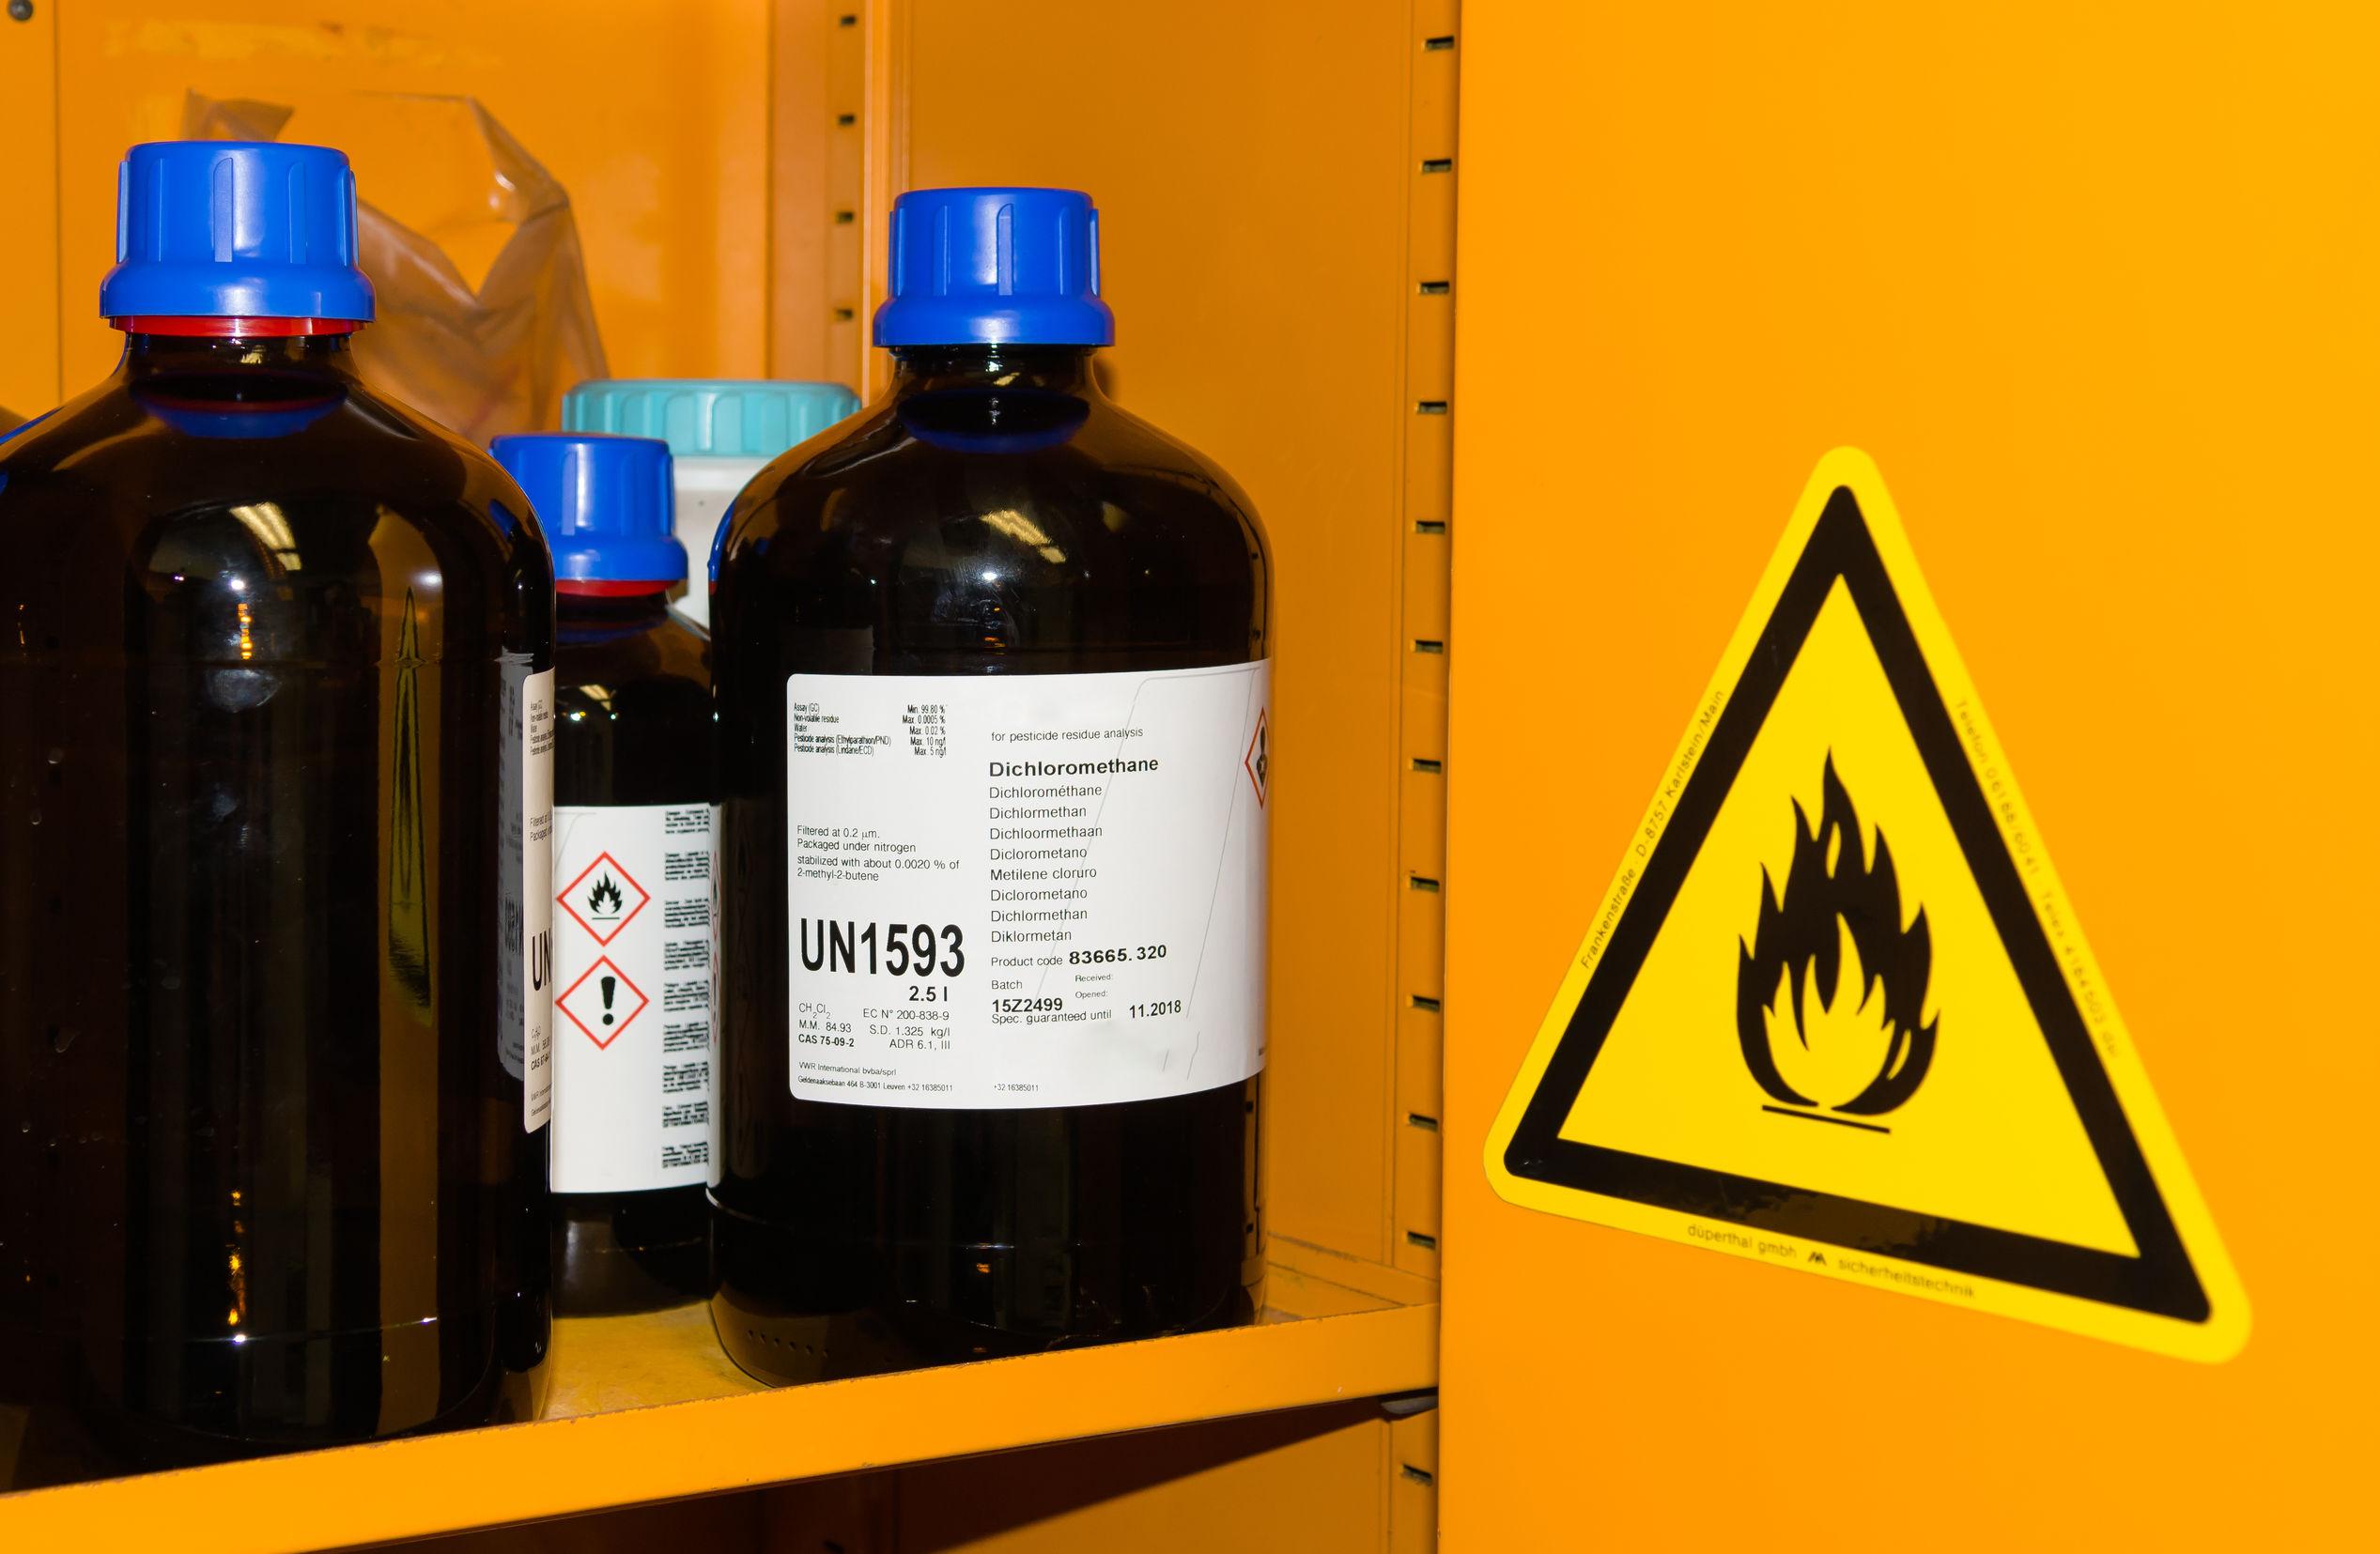 Storage, Handling & Safe Use of Chemicals & Hazardous Materials